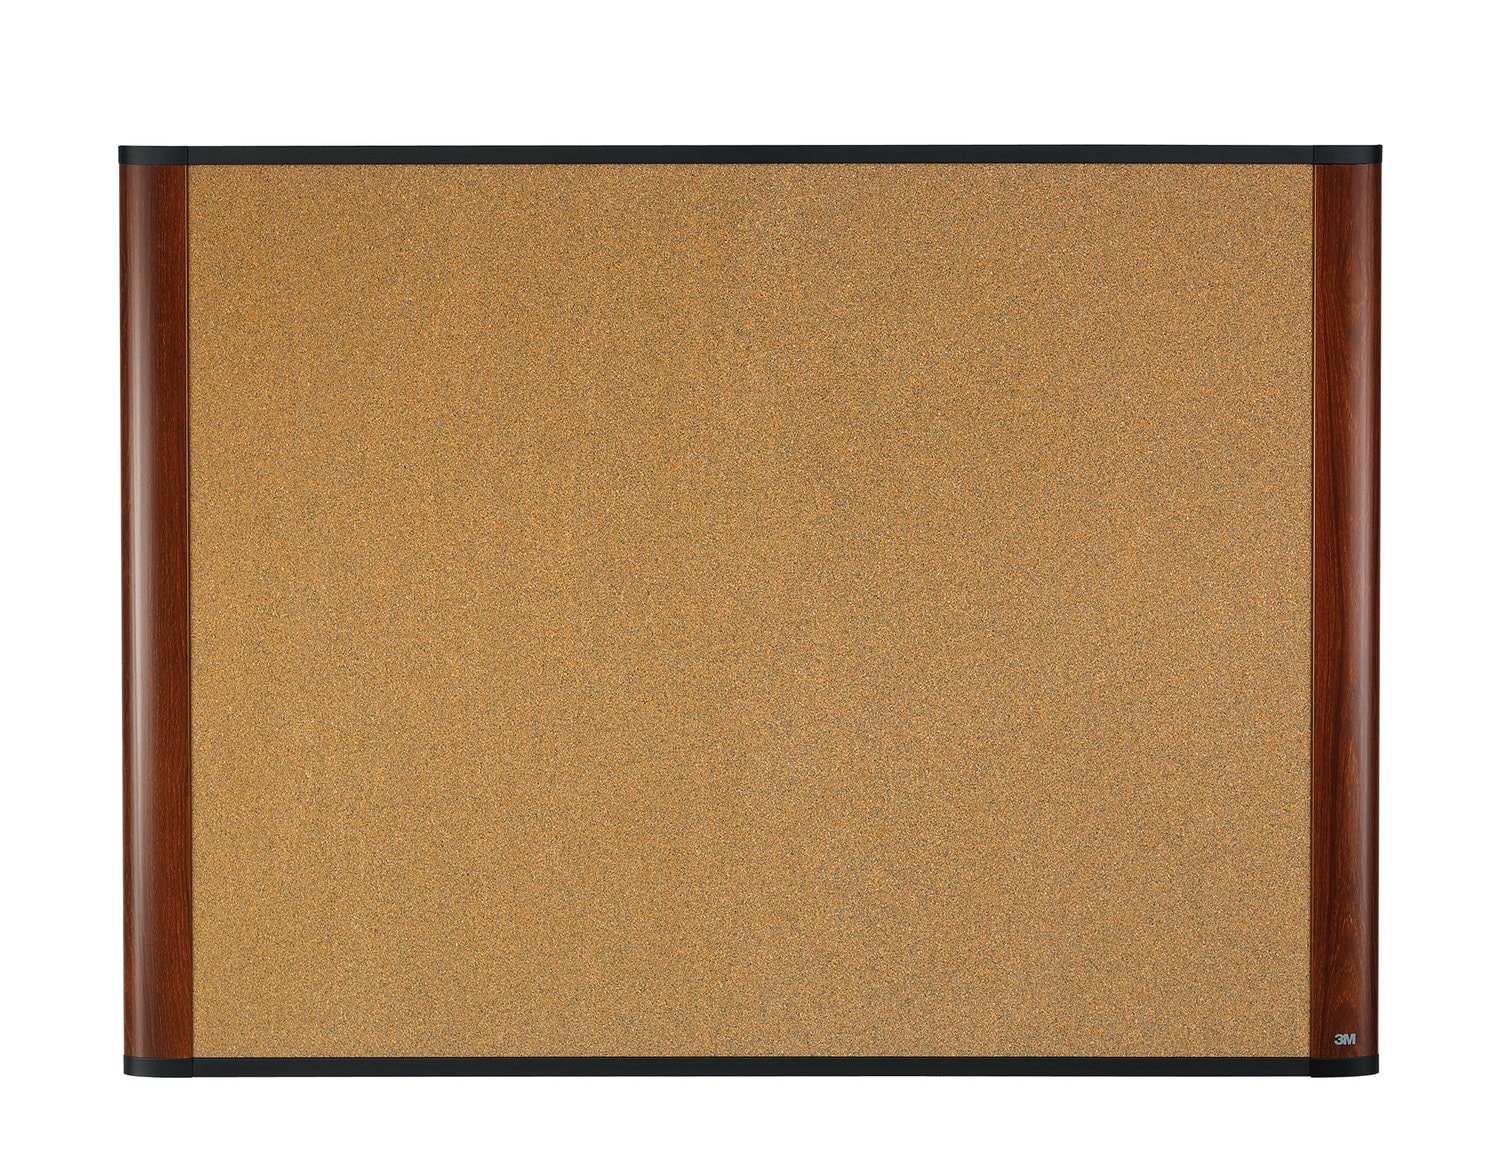 7010332244 - 3M Cork Board C7248MY, 72 in x 48 in x 1 in (182.8 cm x 121.9 cm x 2.5
cm) Mahogany Finish Frame